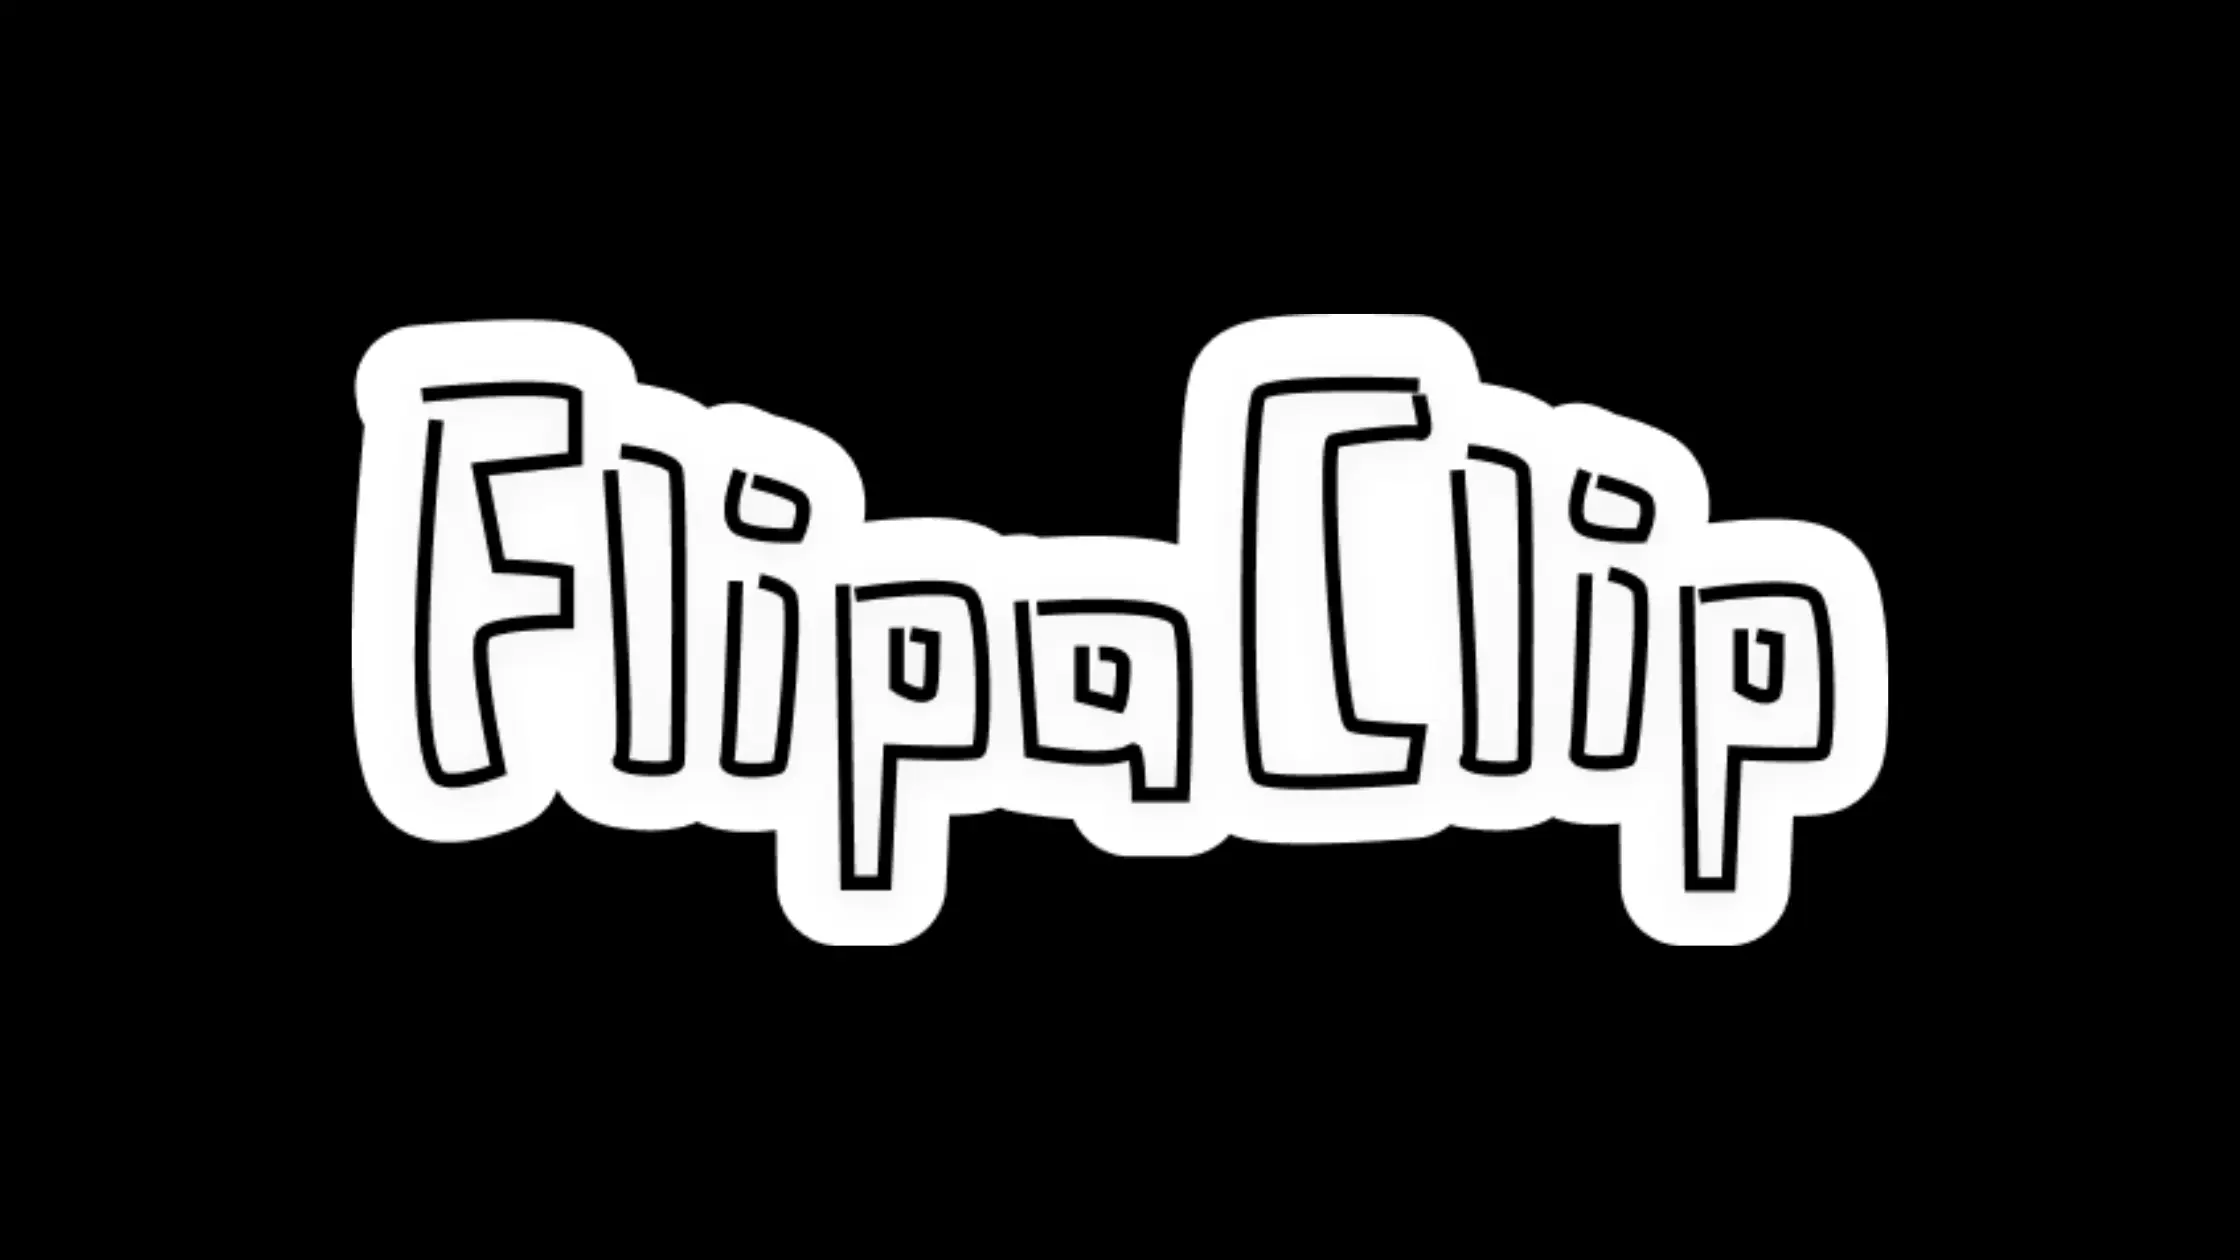 FlipaClip